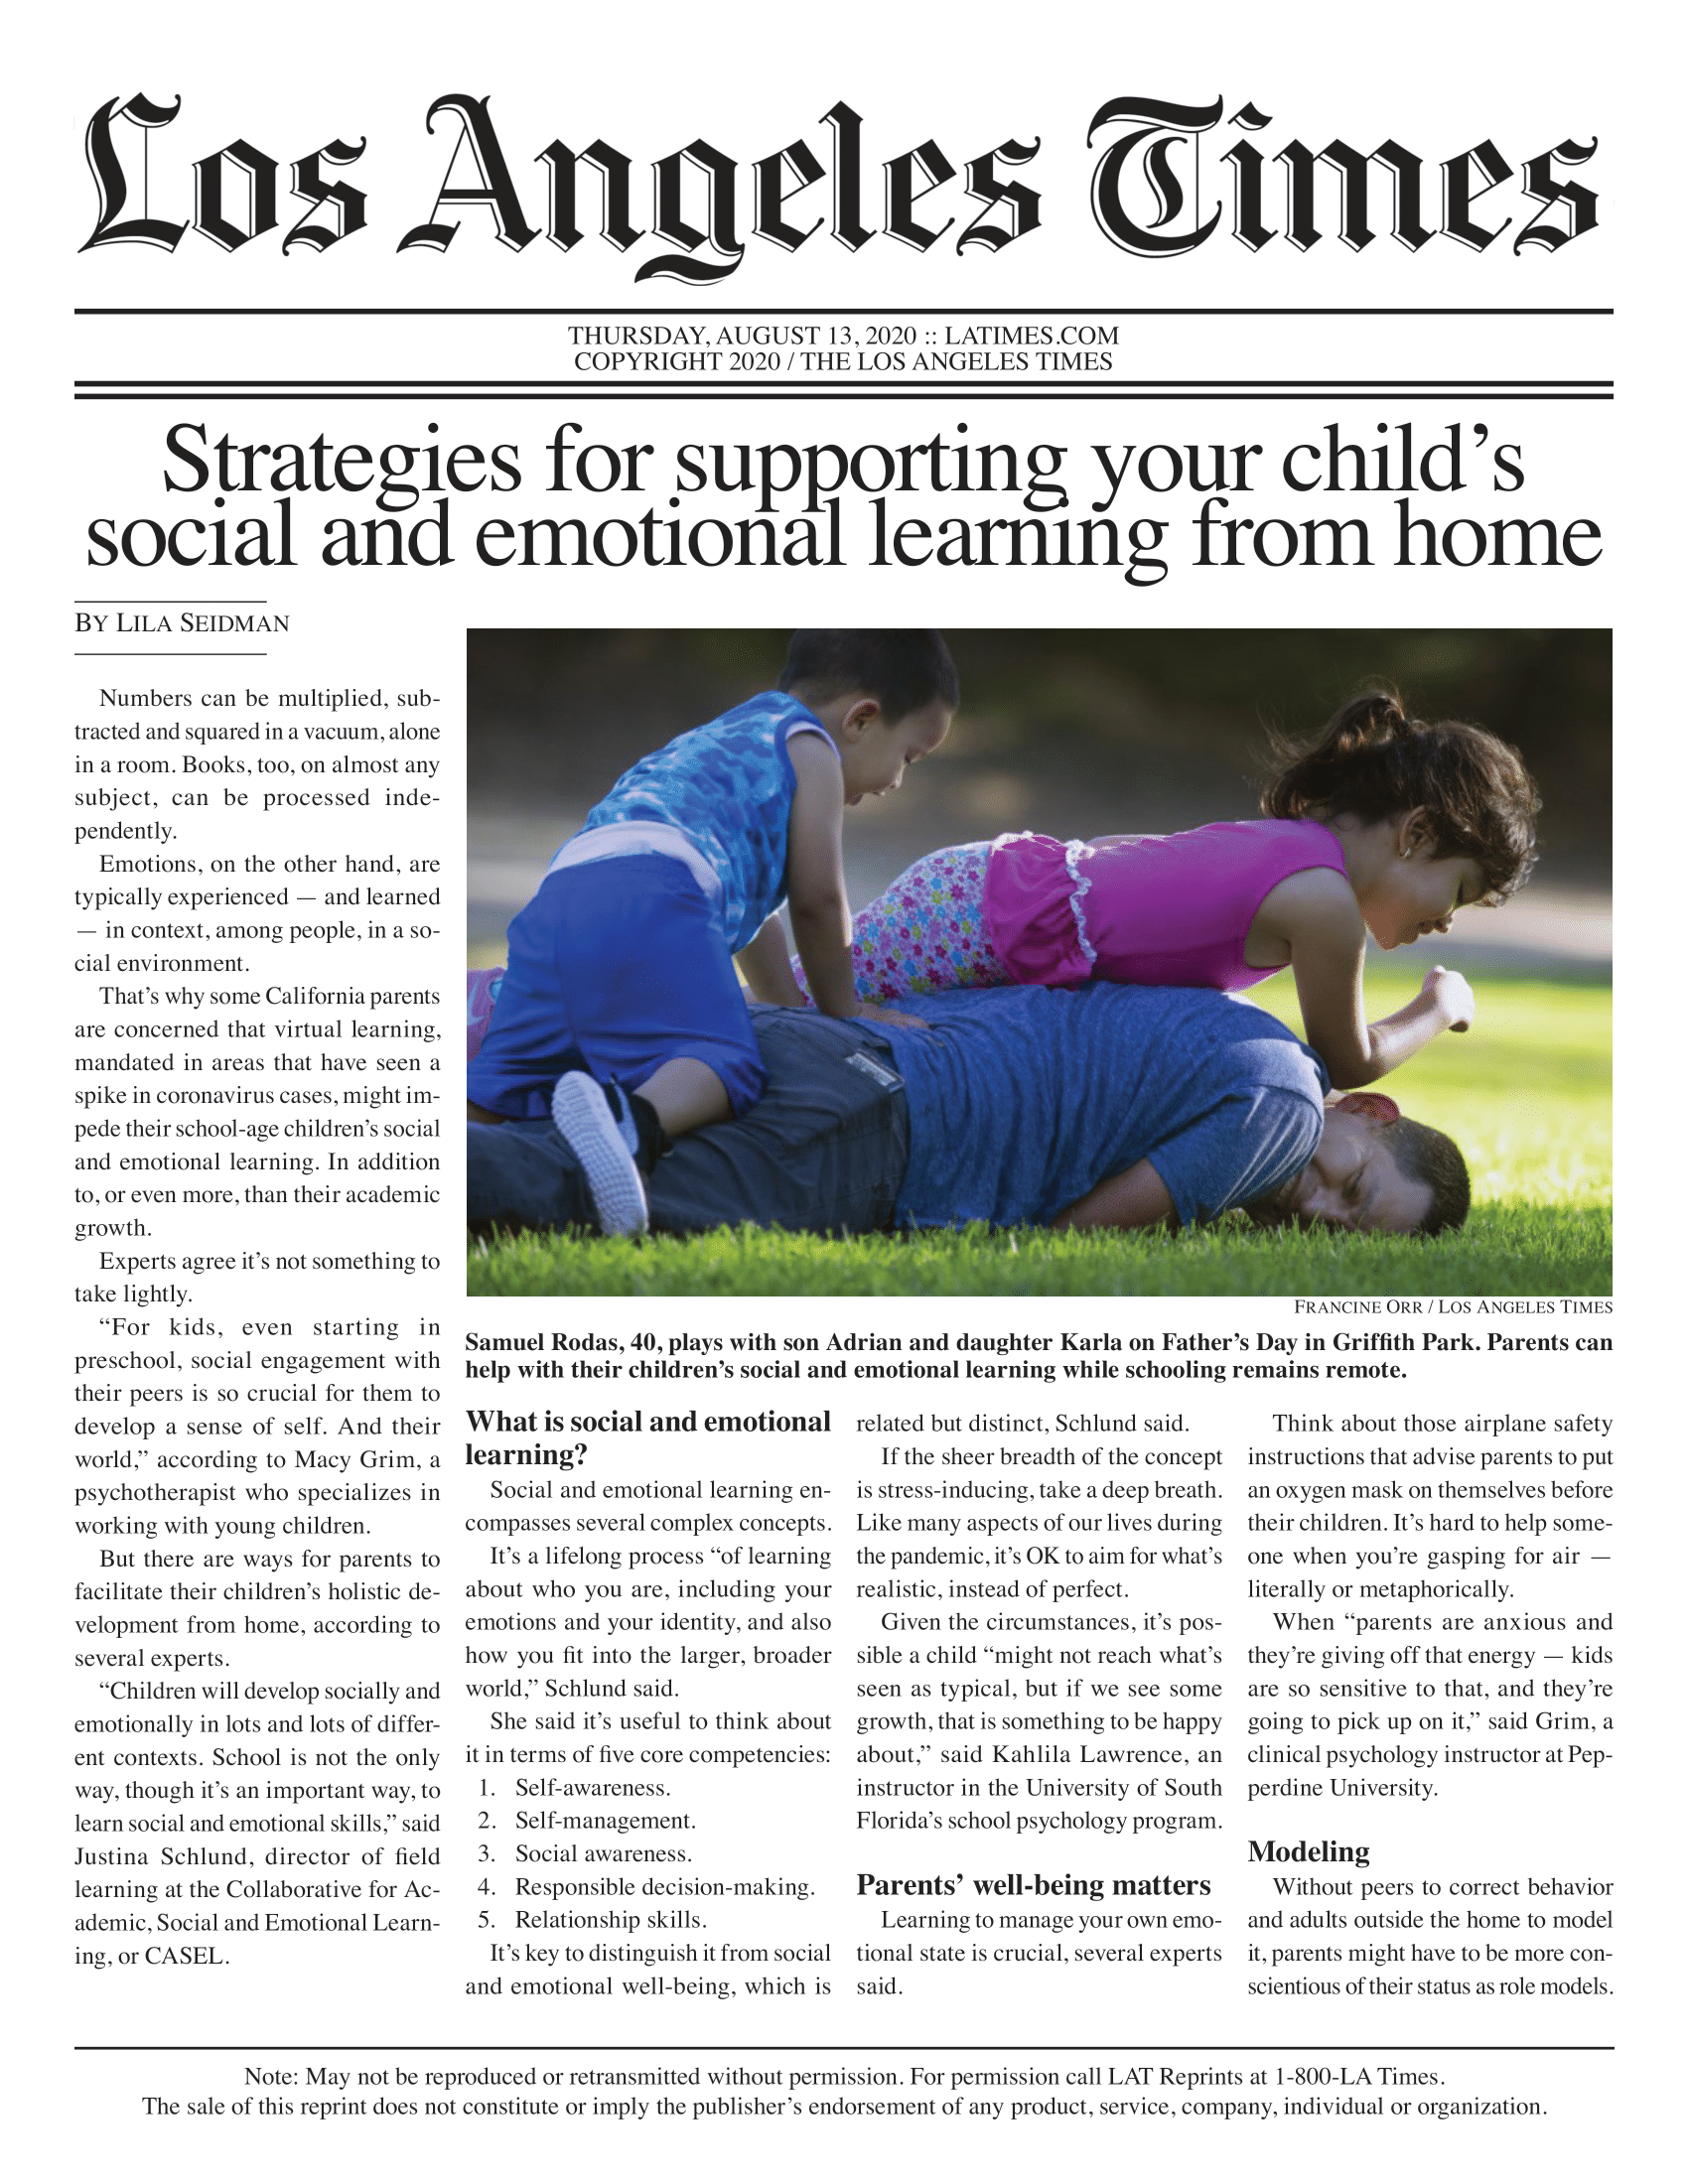 Teach+kids+social+emotional+learning_ePrint-print2-1.png